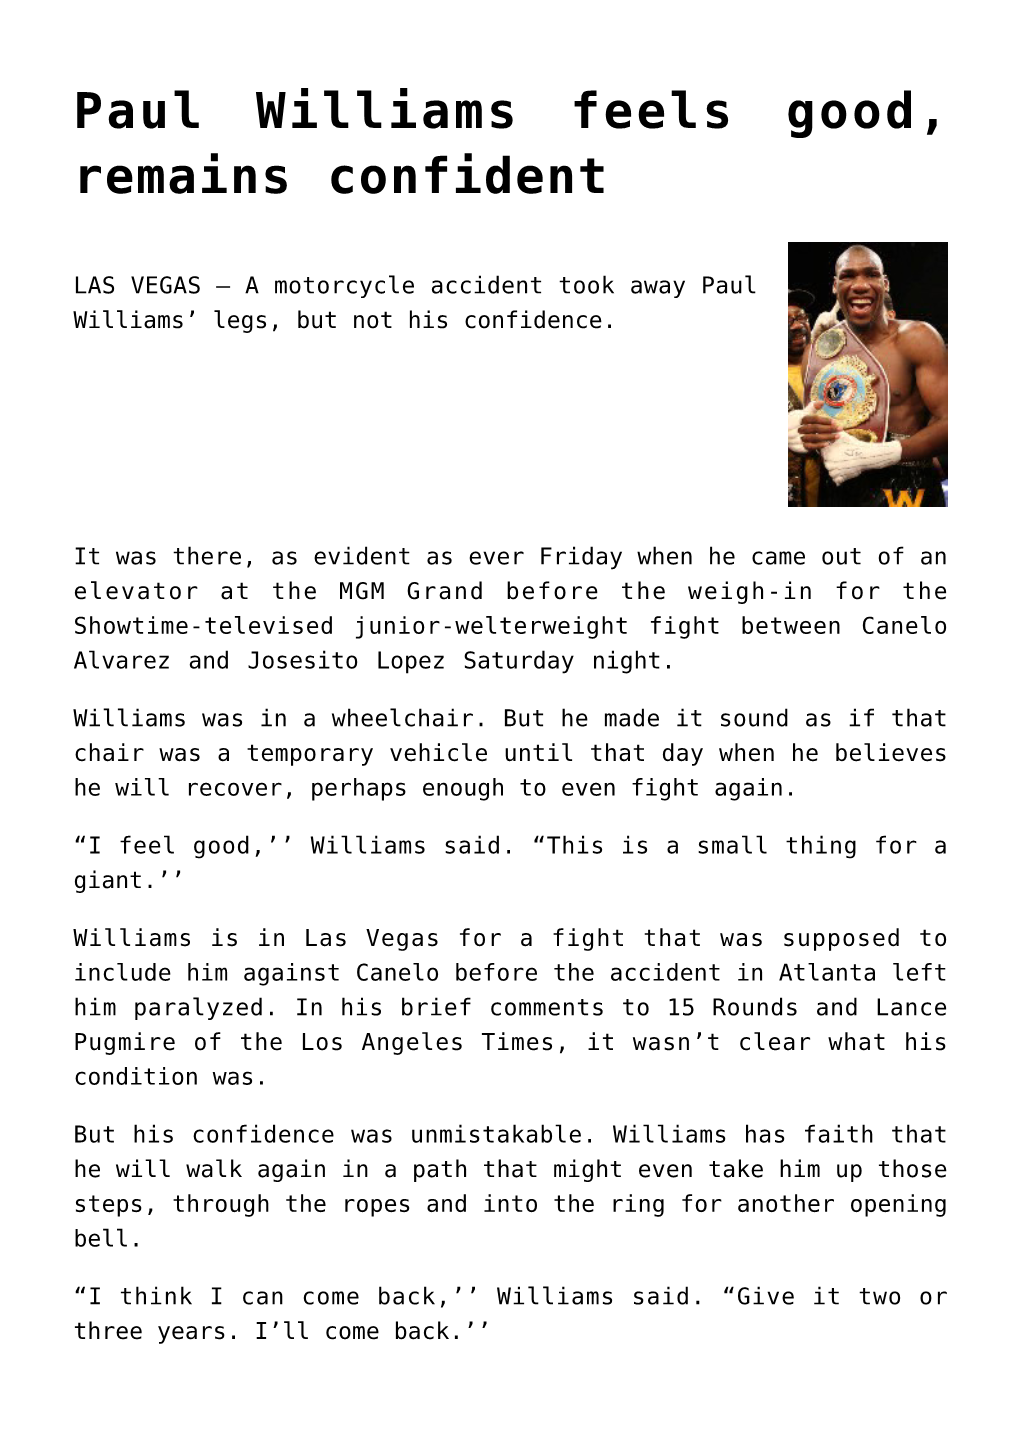 Paul Williams Feels Good, Remains Confident